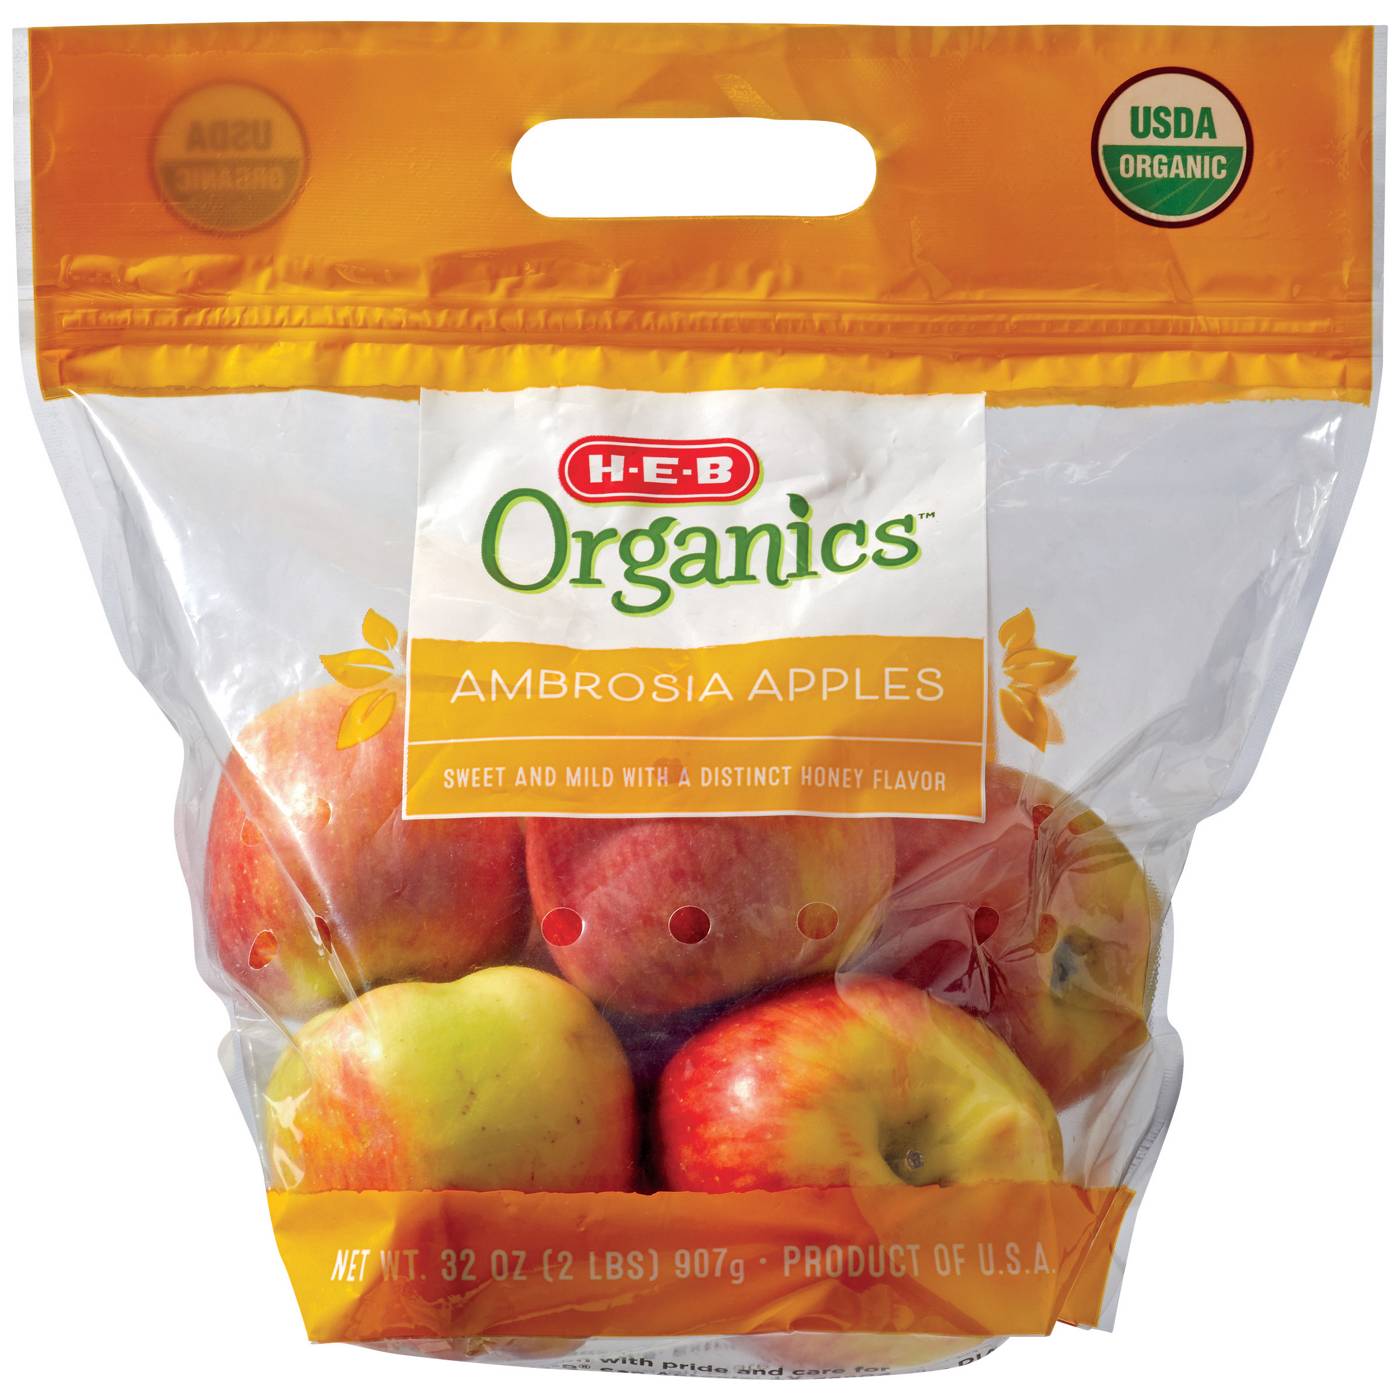 H-E-B Organics Fresh Kanzi Apples - Shop Apples at H-E-B